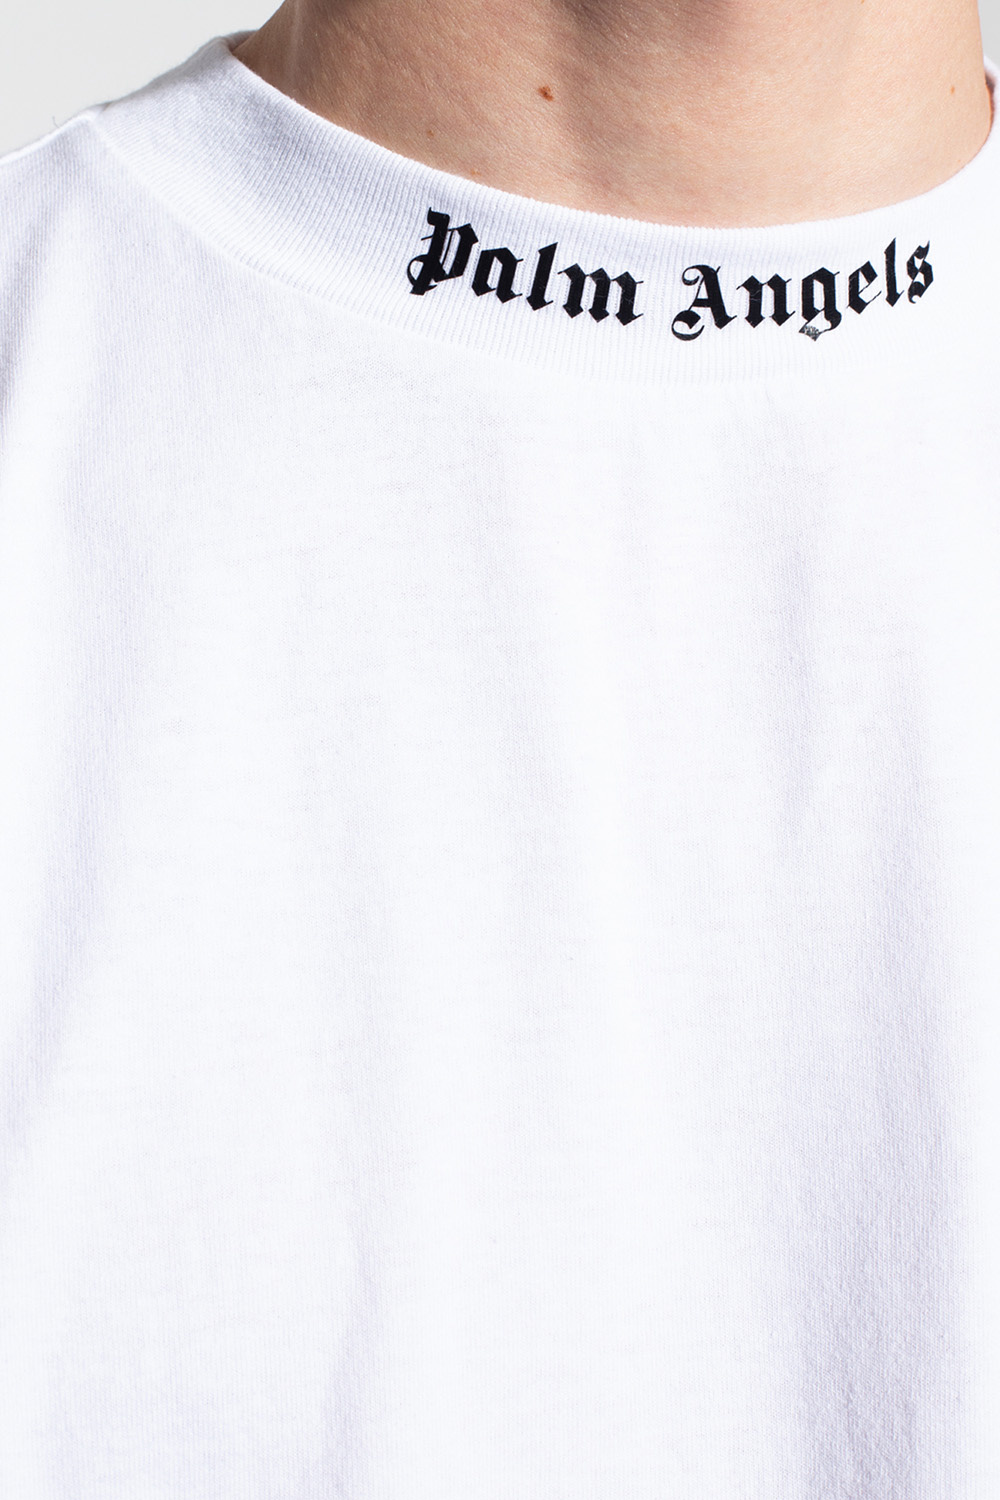 Palm Angels PMAA001S20413023 0110 White T-Shirt S